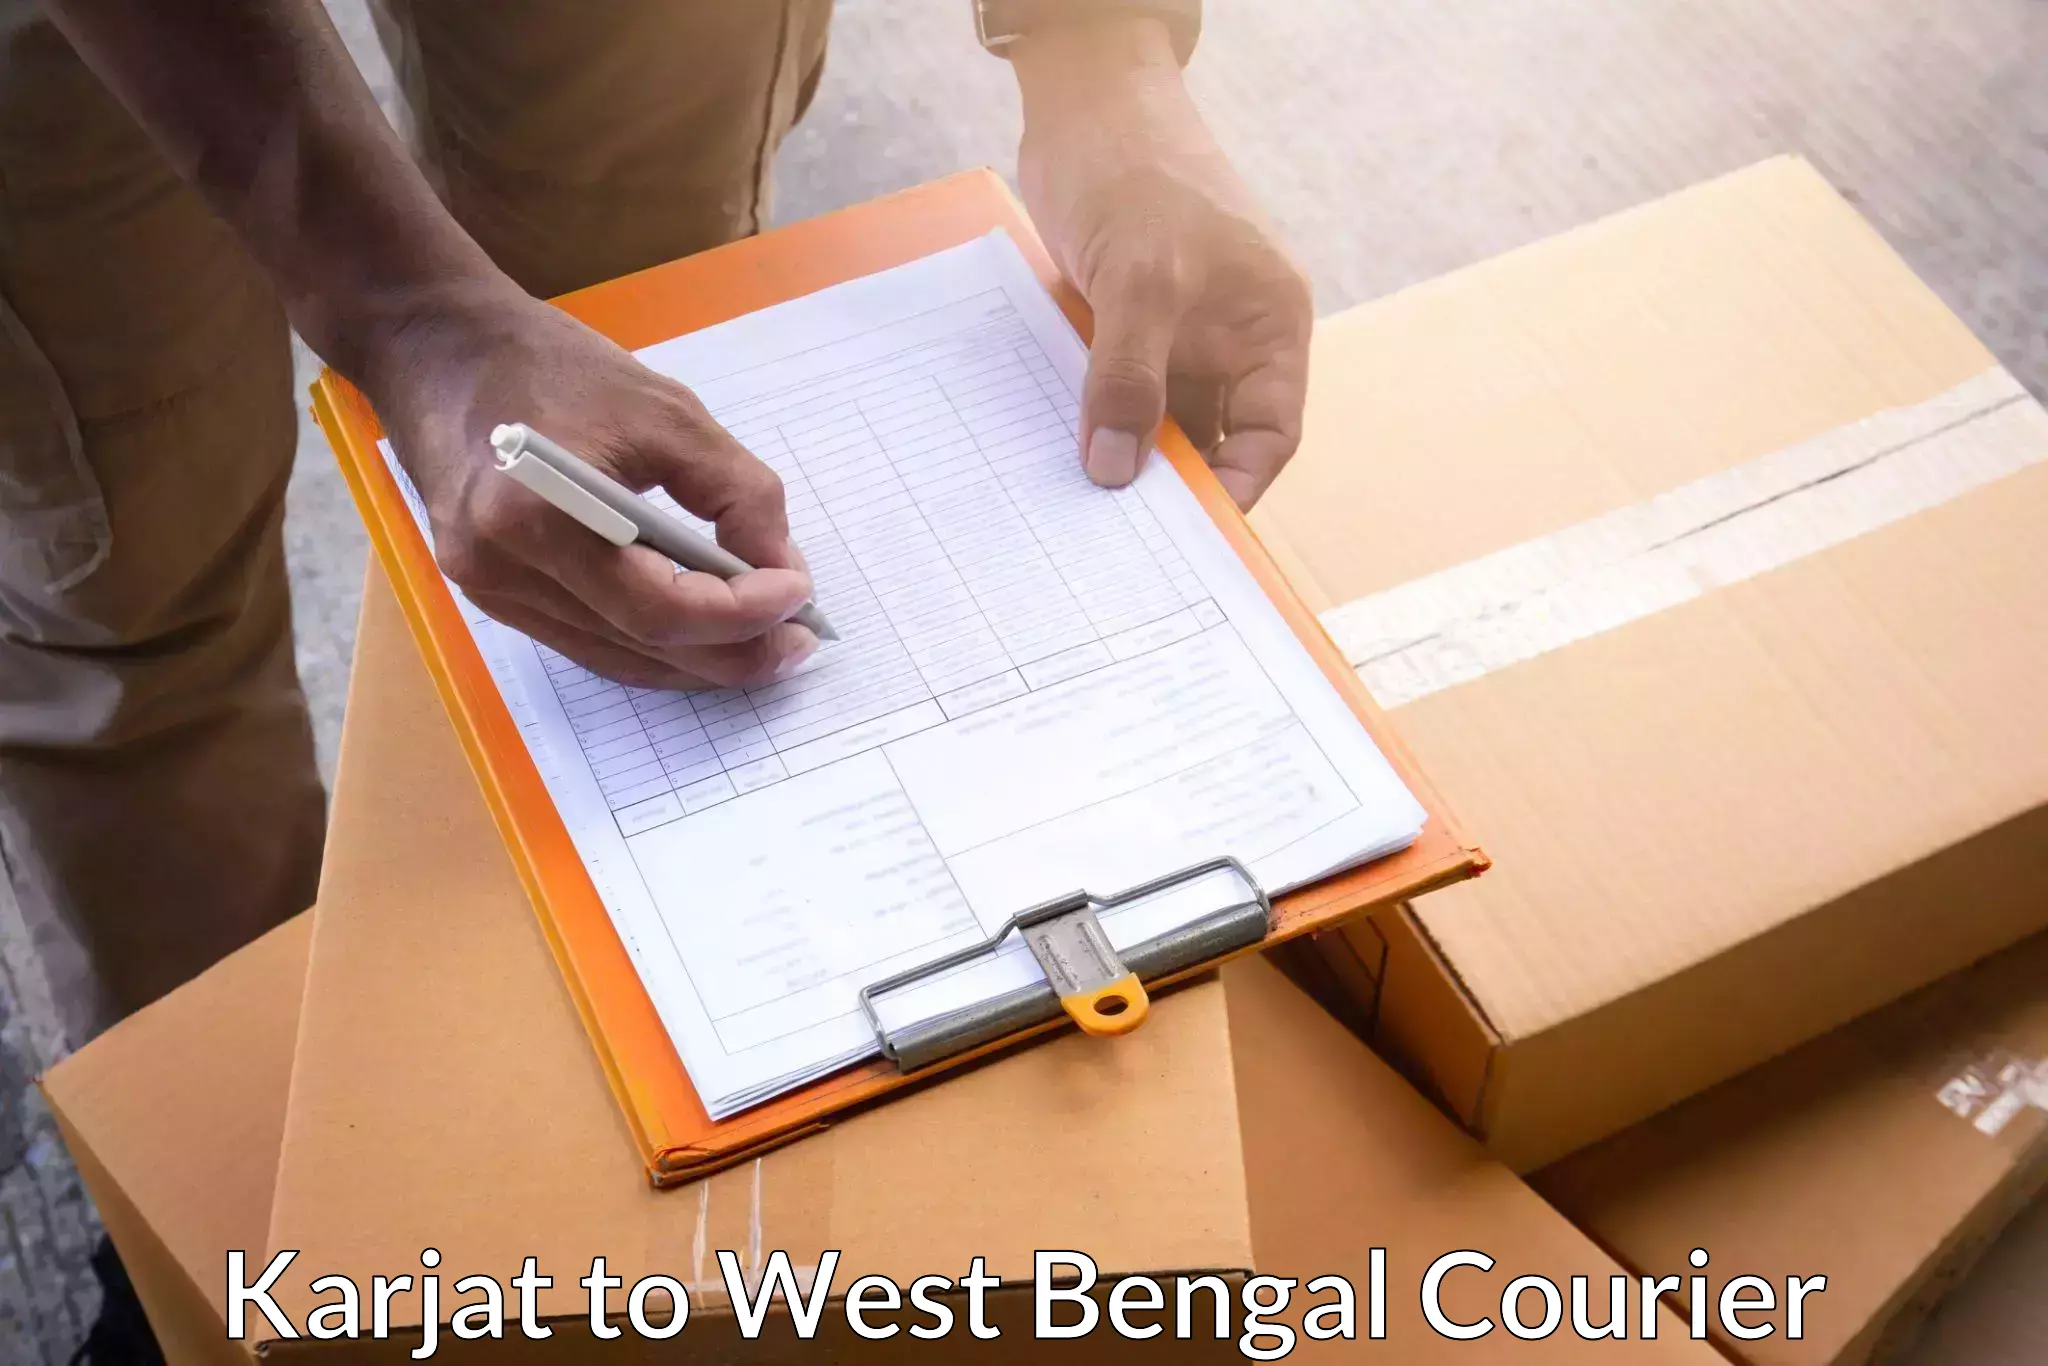 Courier service partnerships Karjat to Durgapur